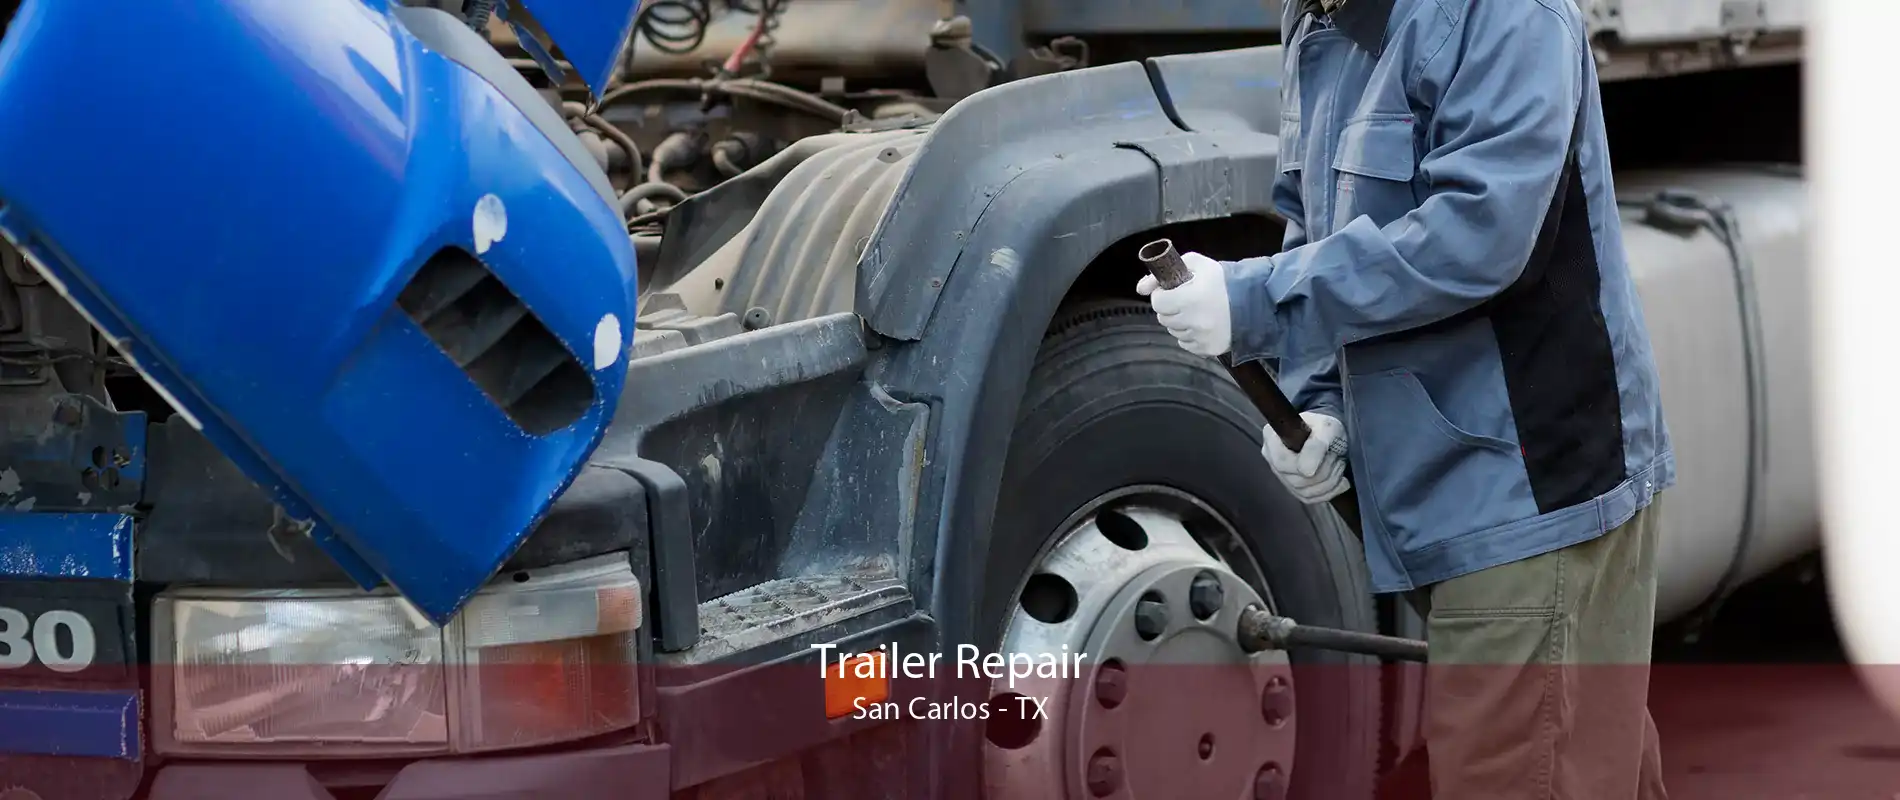 Trailer Repair San Carlos - TX